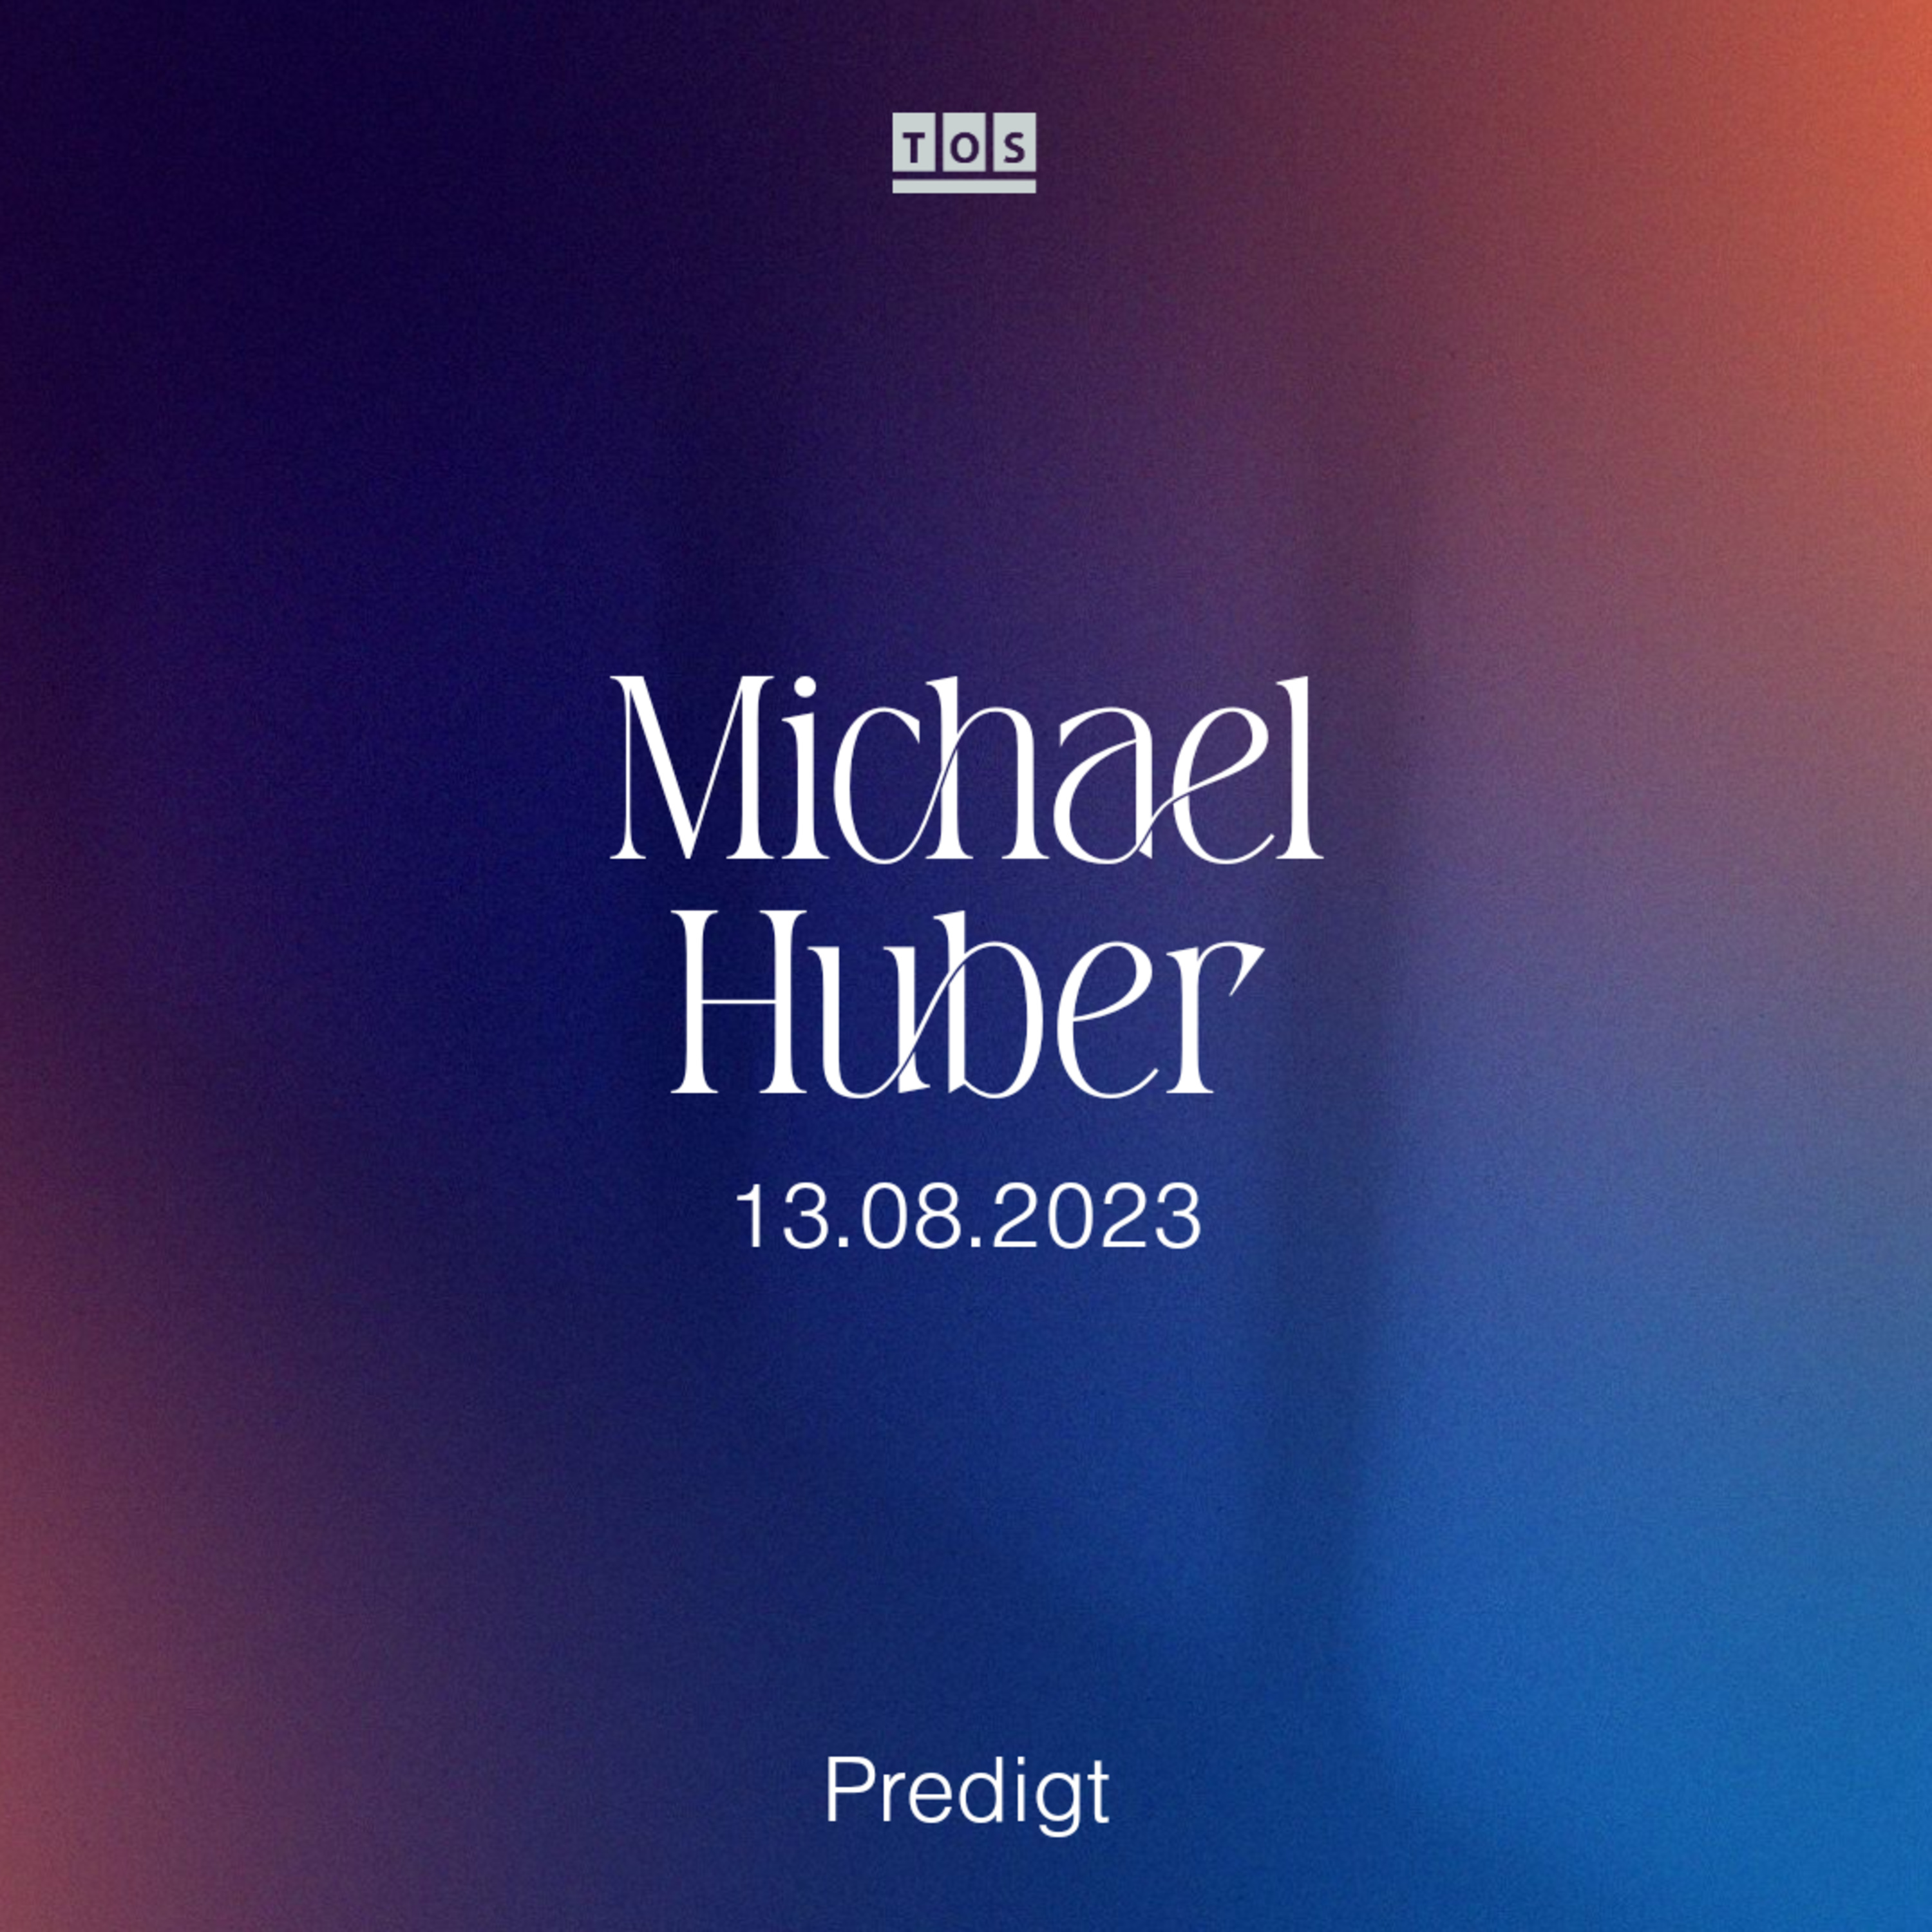 Michael Huber - 13.08.2023